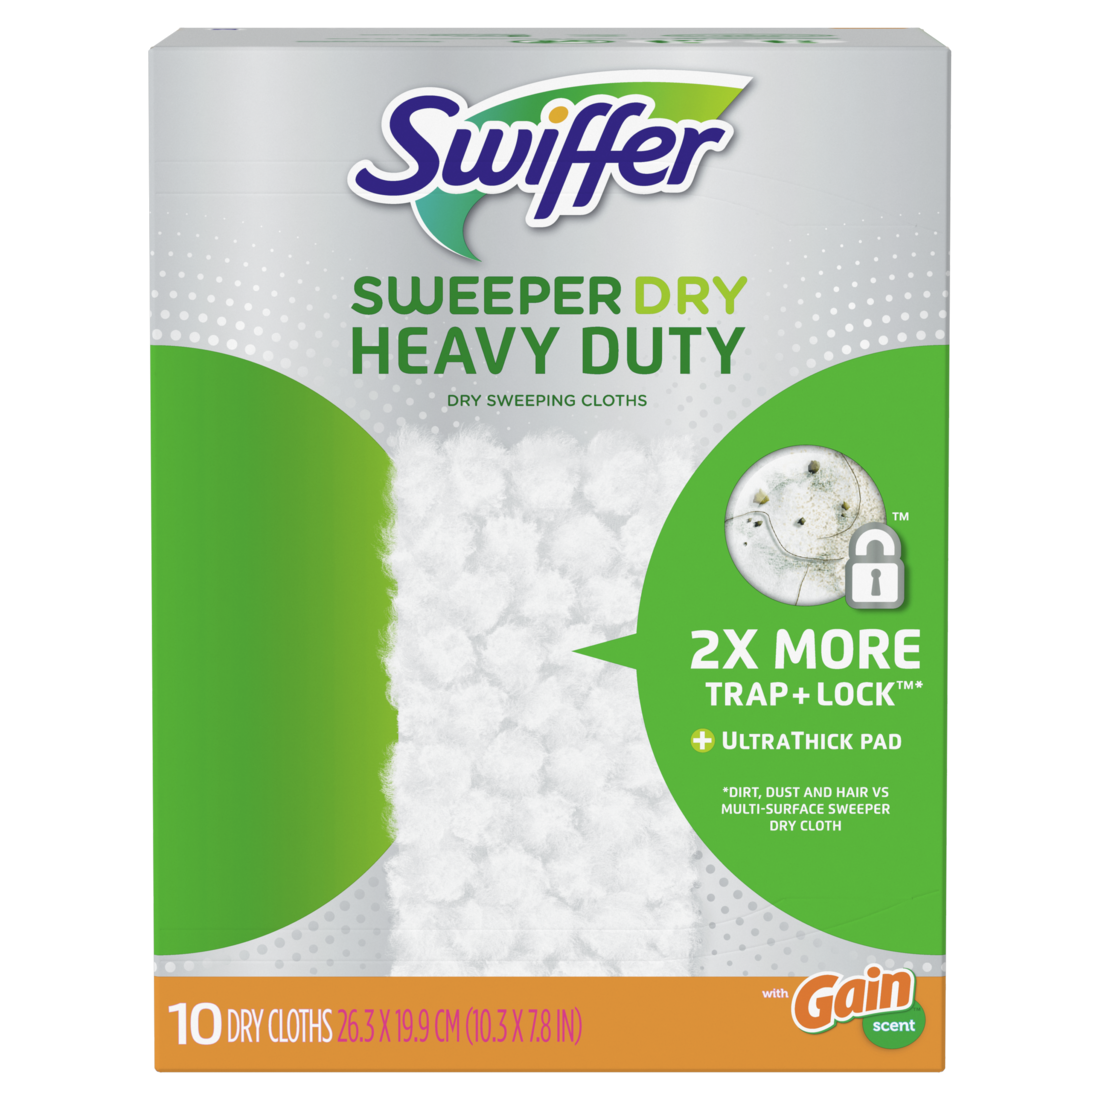 Swiffer Sweeper Heavy Duty Dry Sweeping Cloth Refill Gain Original Fresh Scent - 10ct/4pk